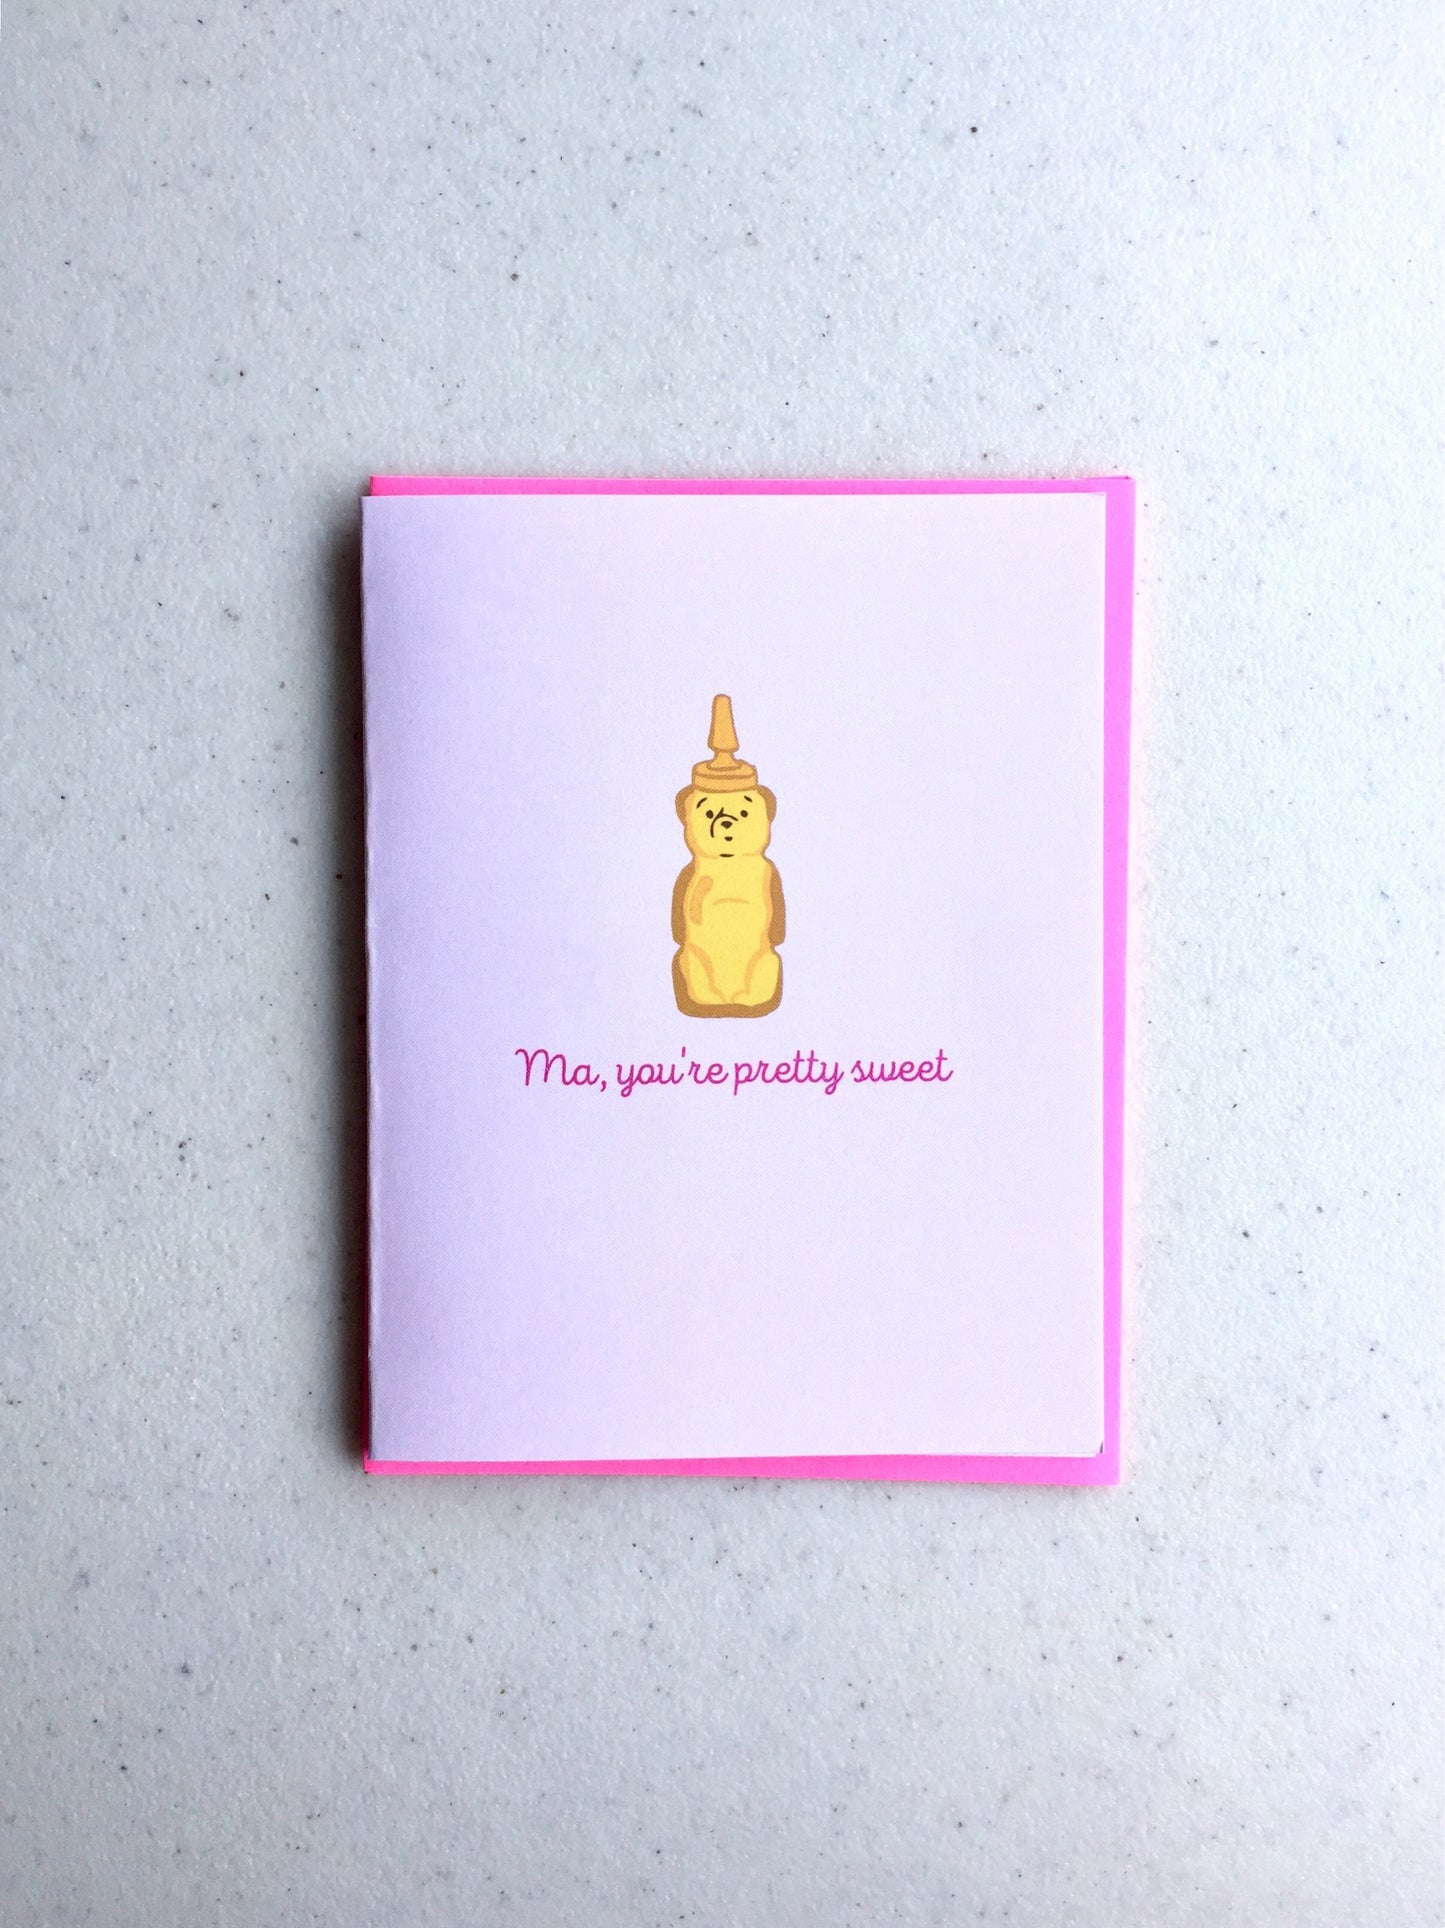 Honey Bear Mother's Day Card - Honey Pot, Sweet Card, Honey Pun Gift, Honey Jar, Mothers Day Card, Card for Mom, Mom Birthday Card